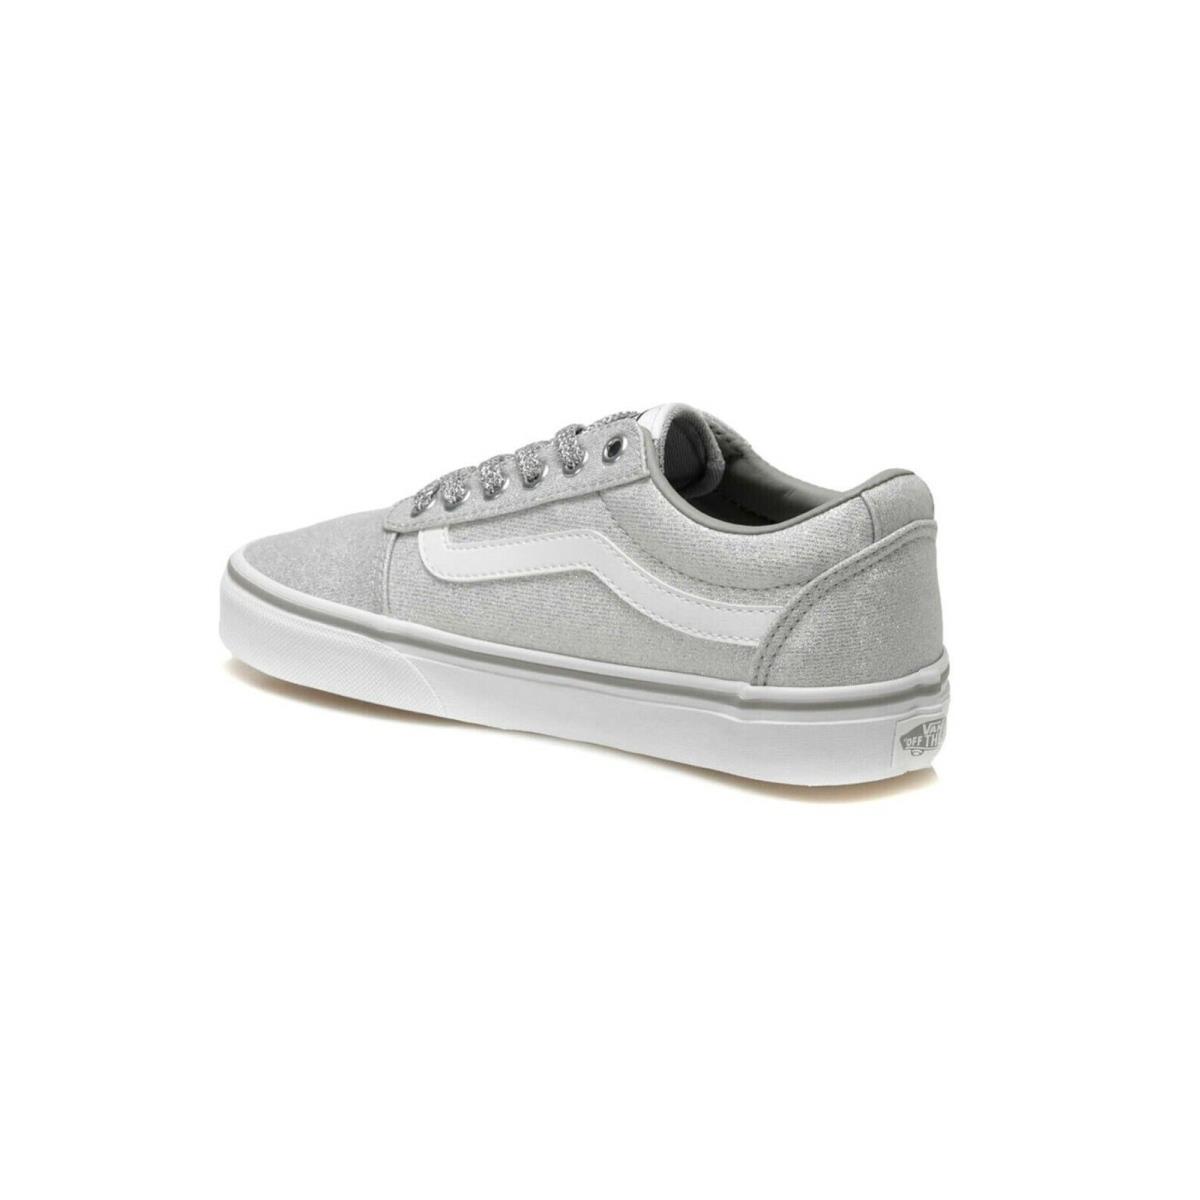 Vans shoes Ward Lurex - Silver 6